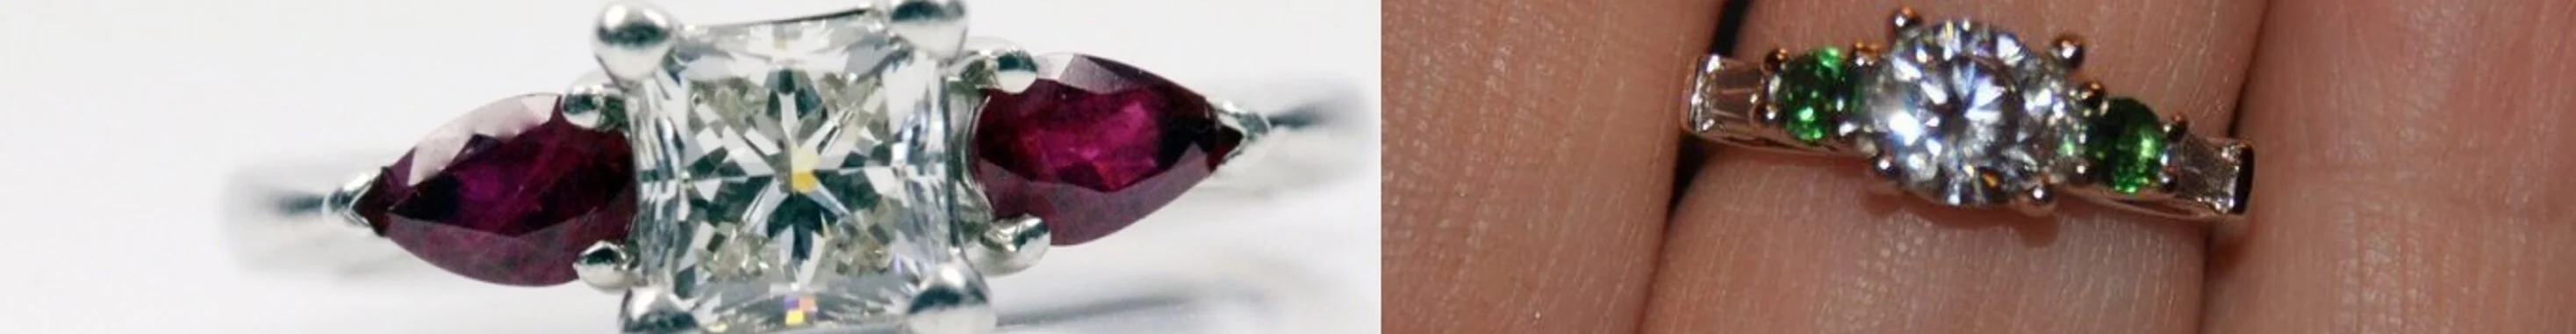 diamond and gemstones engagement rings